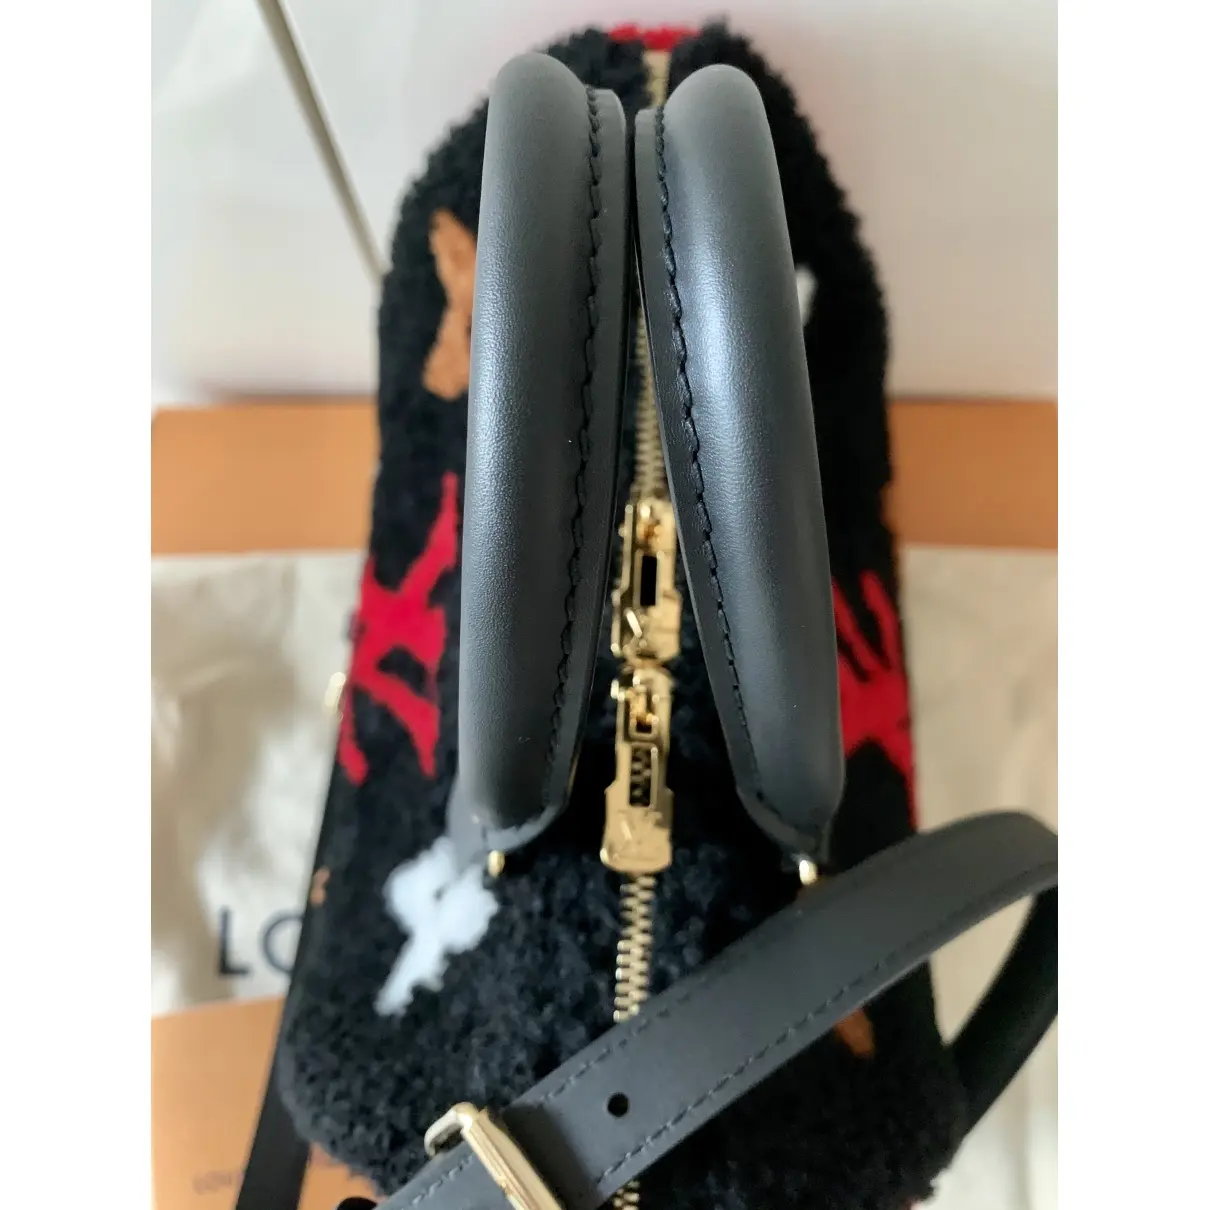 Buy Louis Vuitton Speedy Bandoulière shearling handbag online